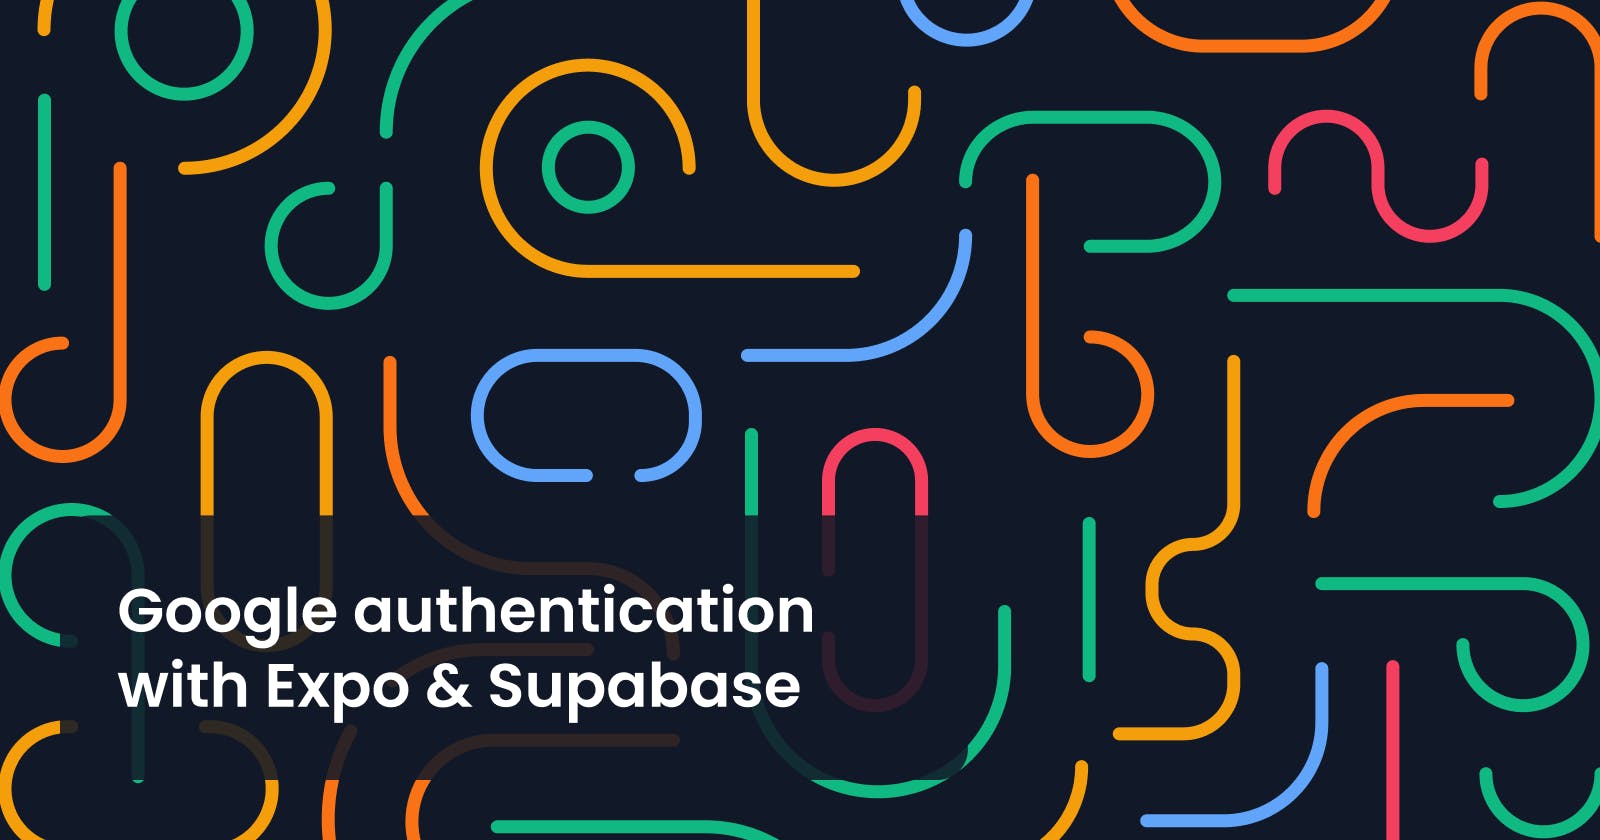 Google authentication with Expo & Supabase